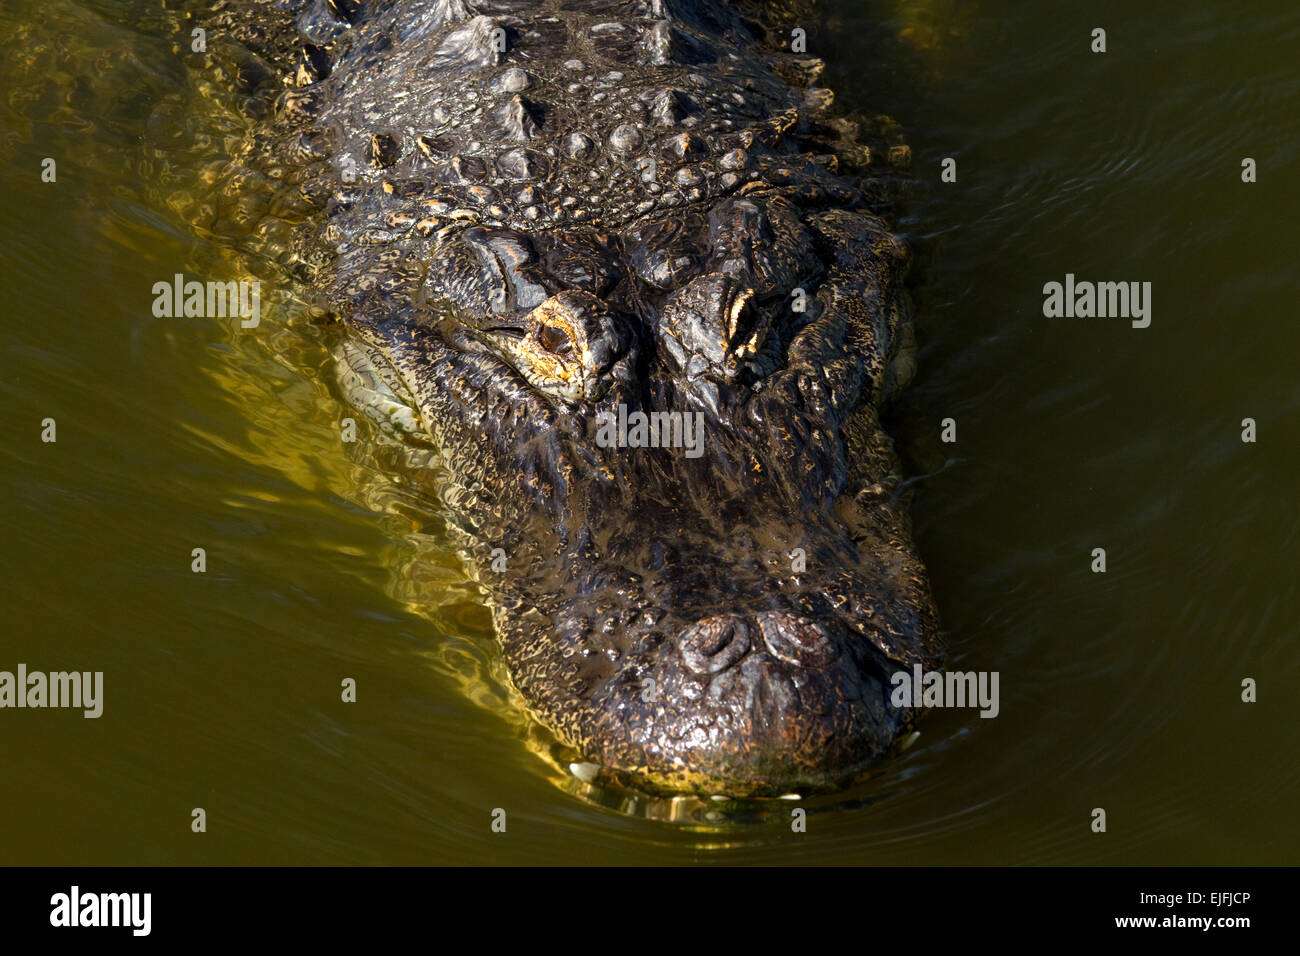 American Alligator Close-up. Stock Photo